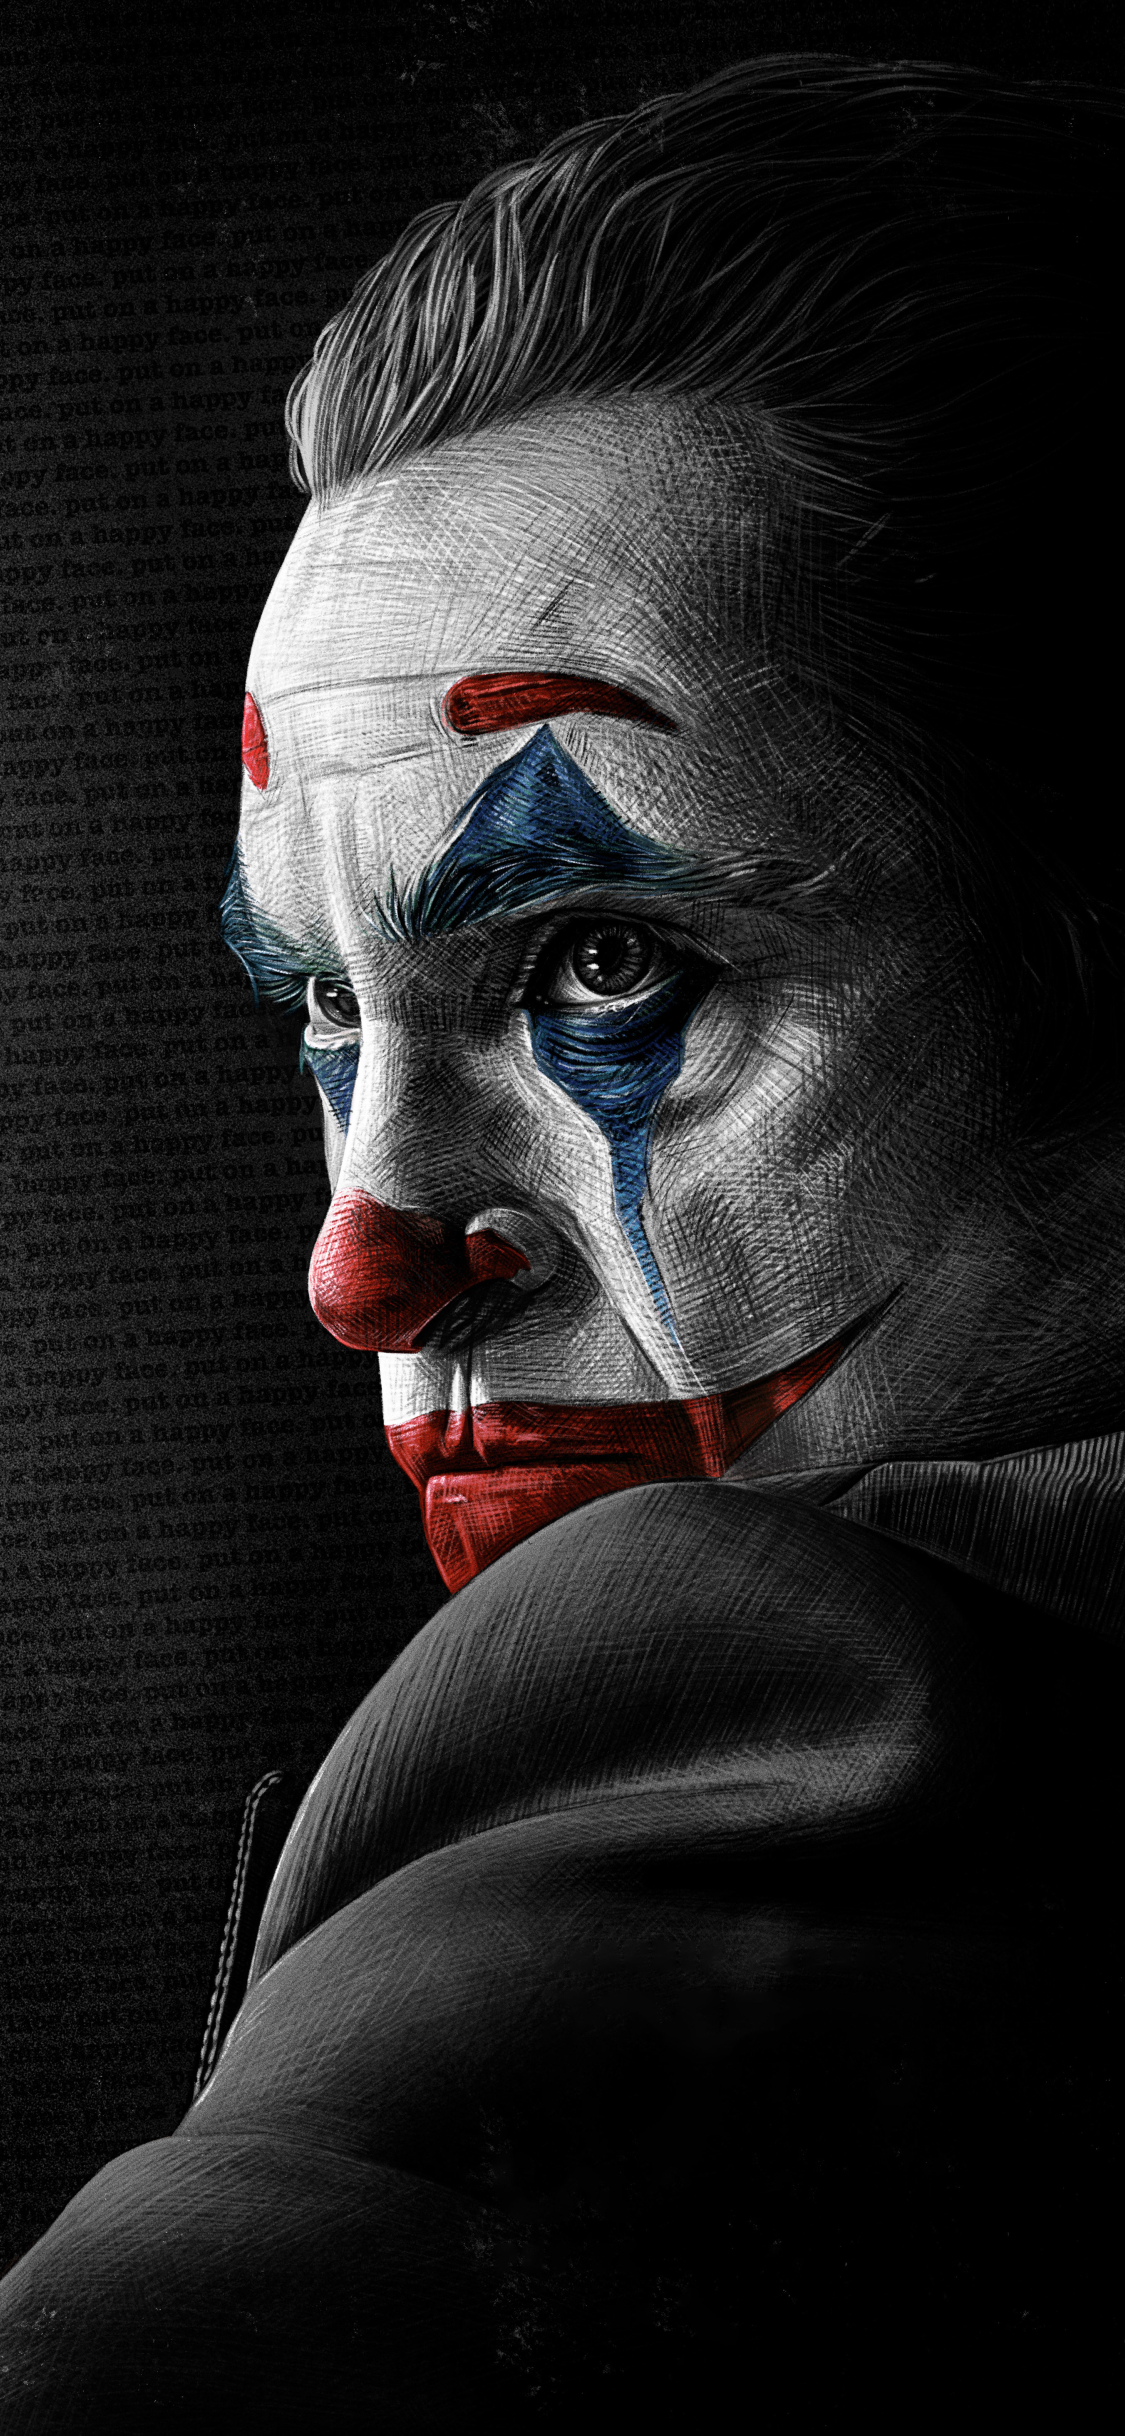 4k Joaquin Phoenix As Joker iPhone XS, iPhone 10